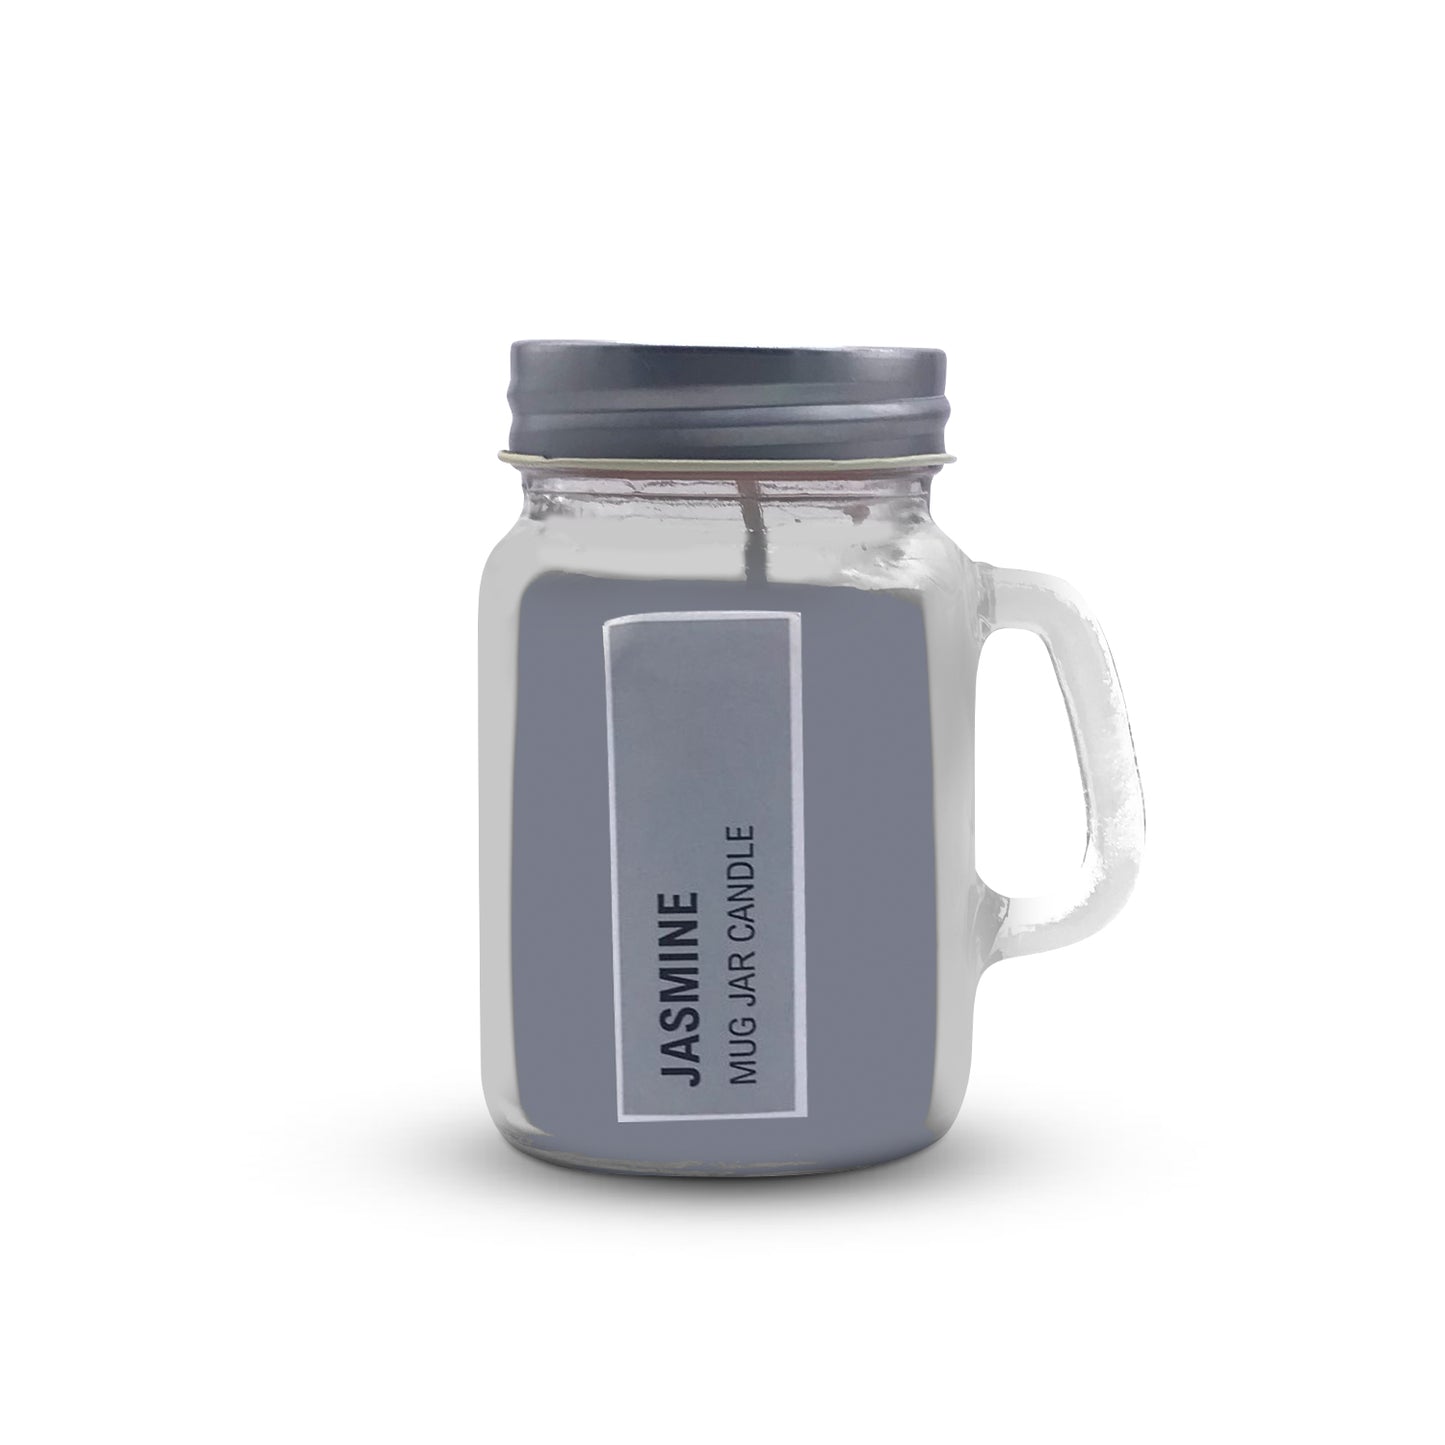 AuraDecor Fragrance Mug Jar Candle